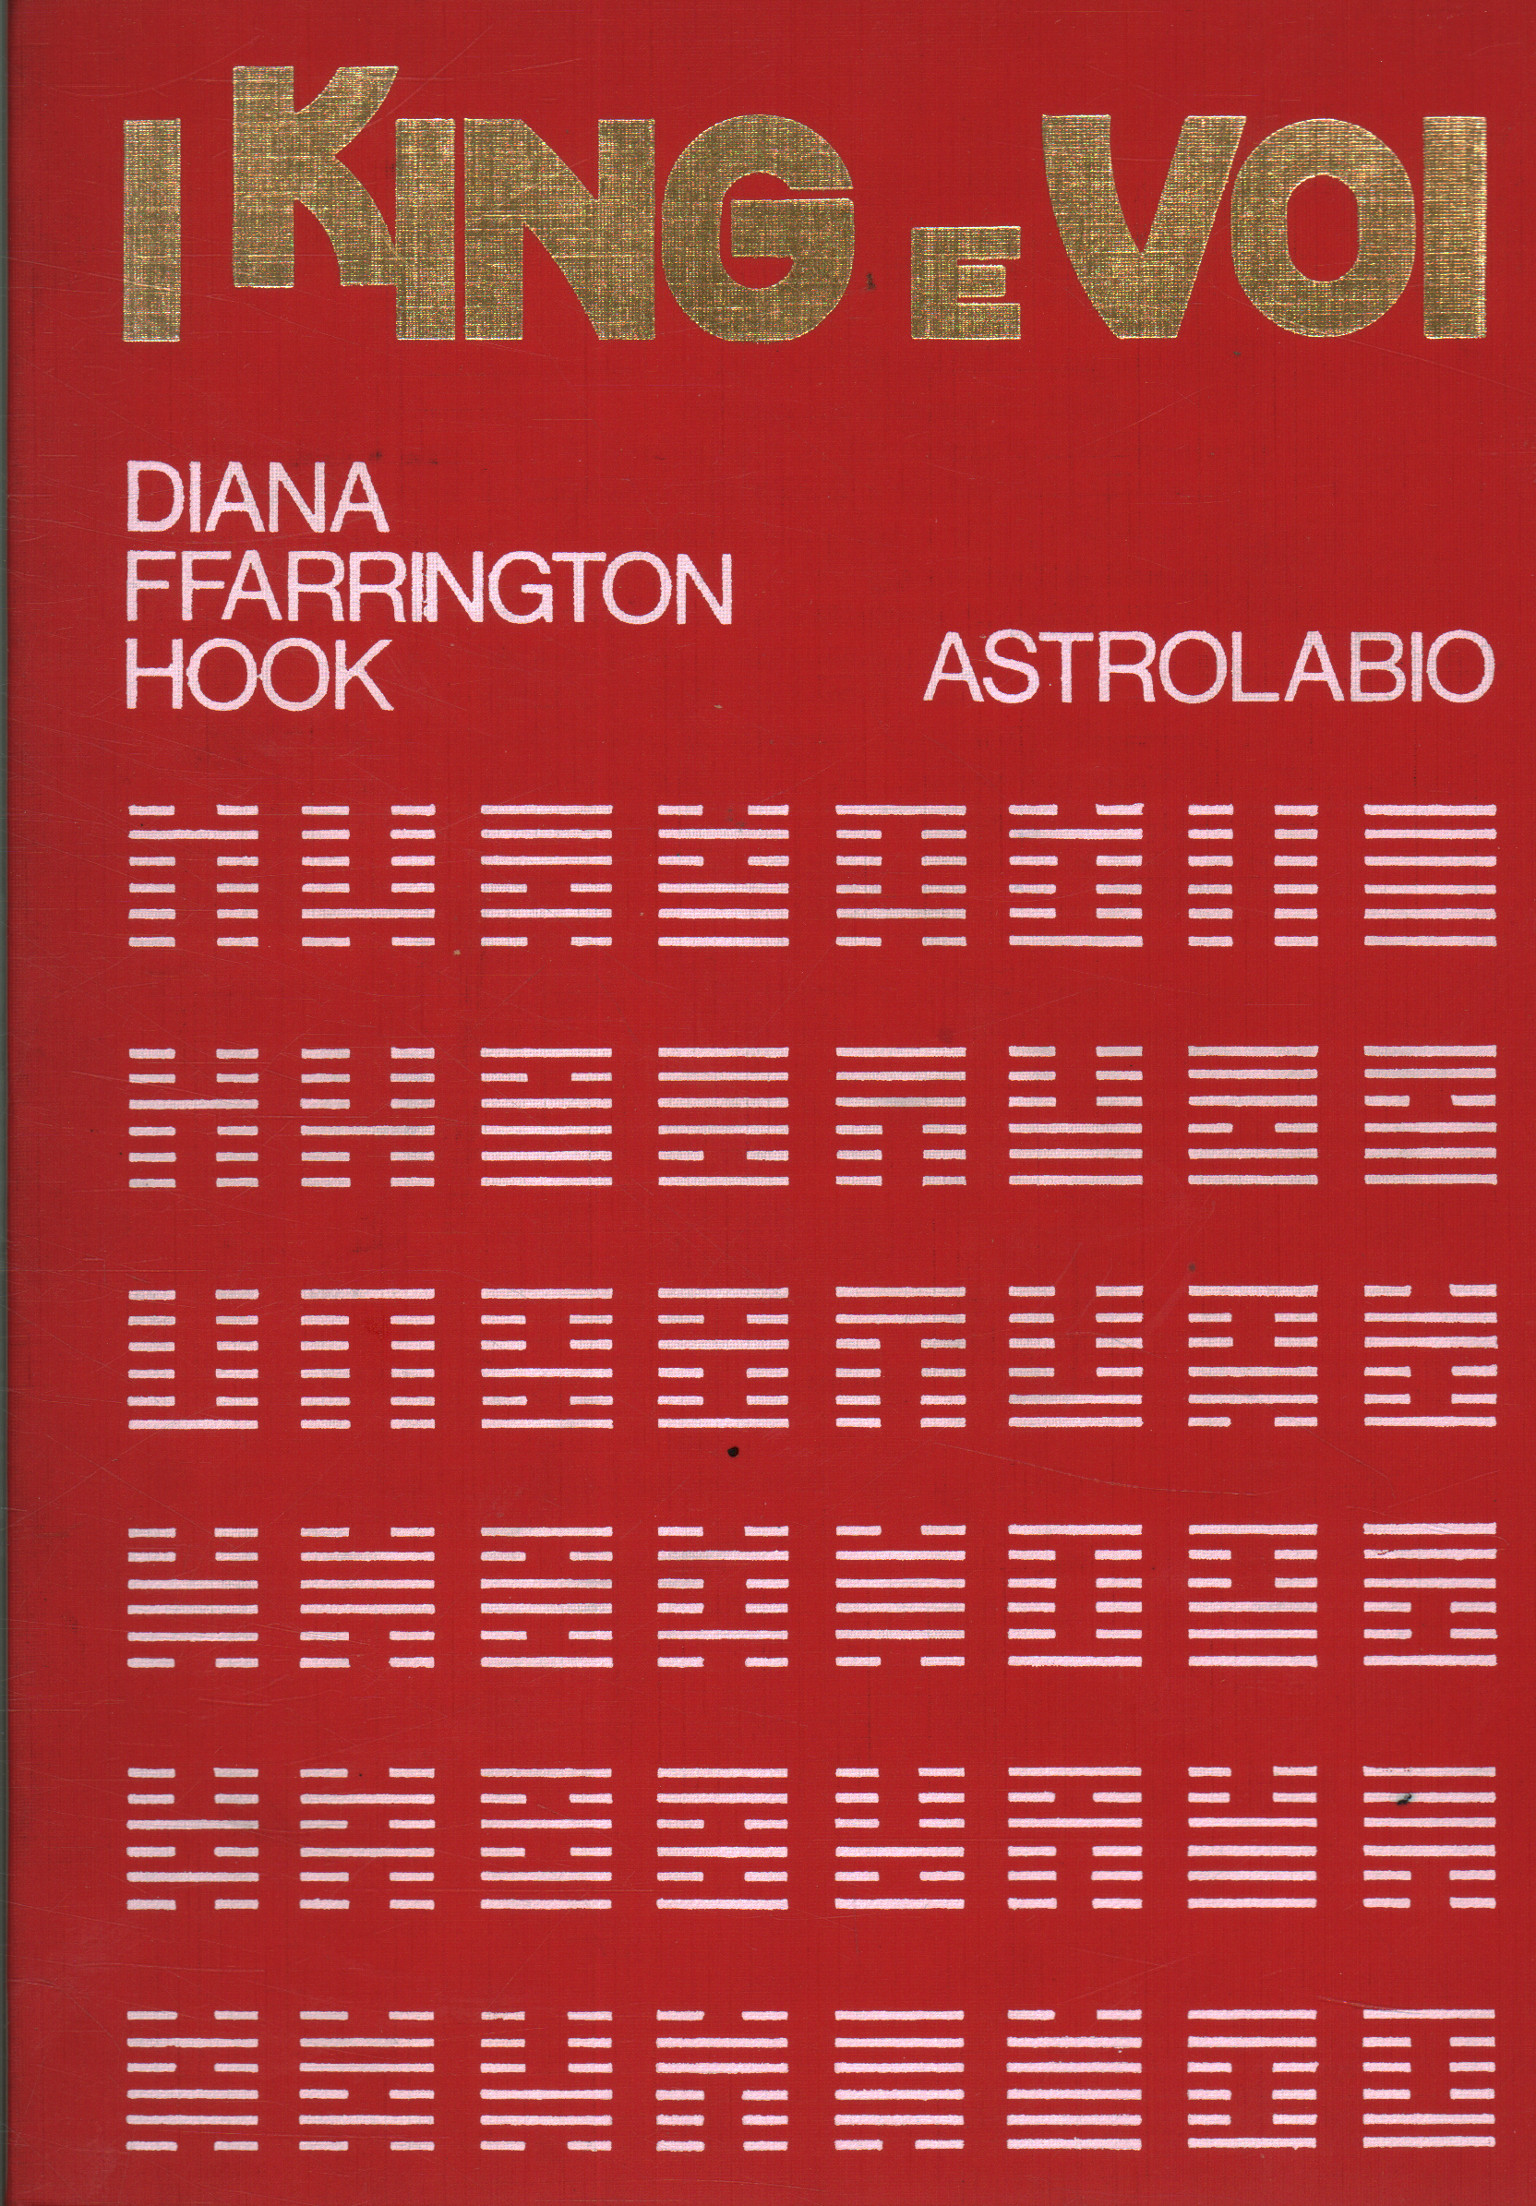 L I Ching et vous, Diana Ffarington Hook